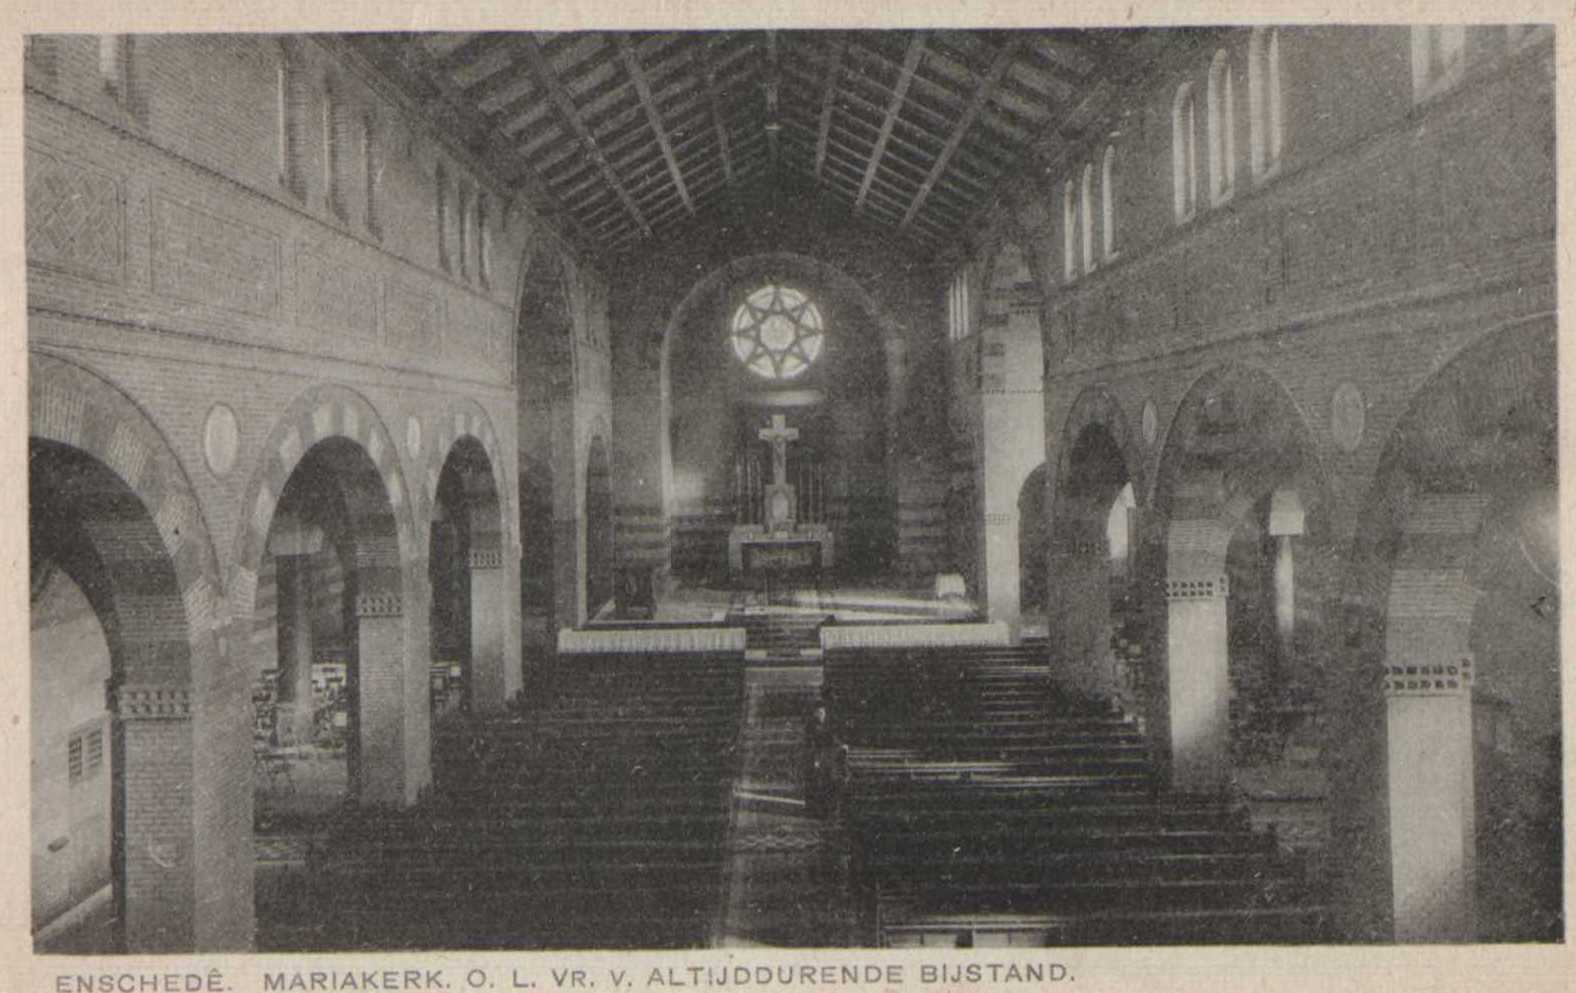 Mariakerk-interieur-1942.jpg